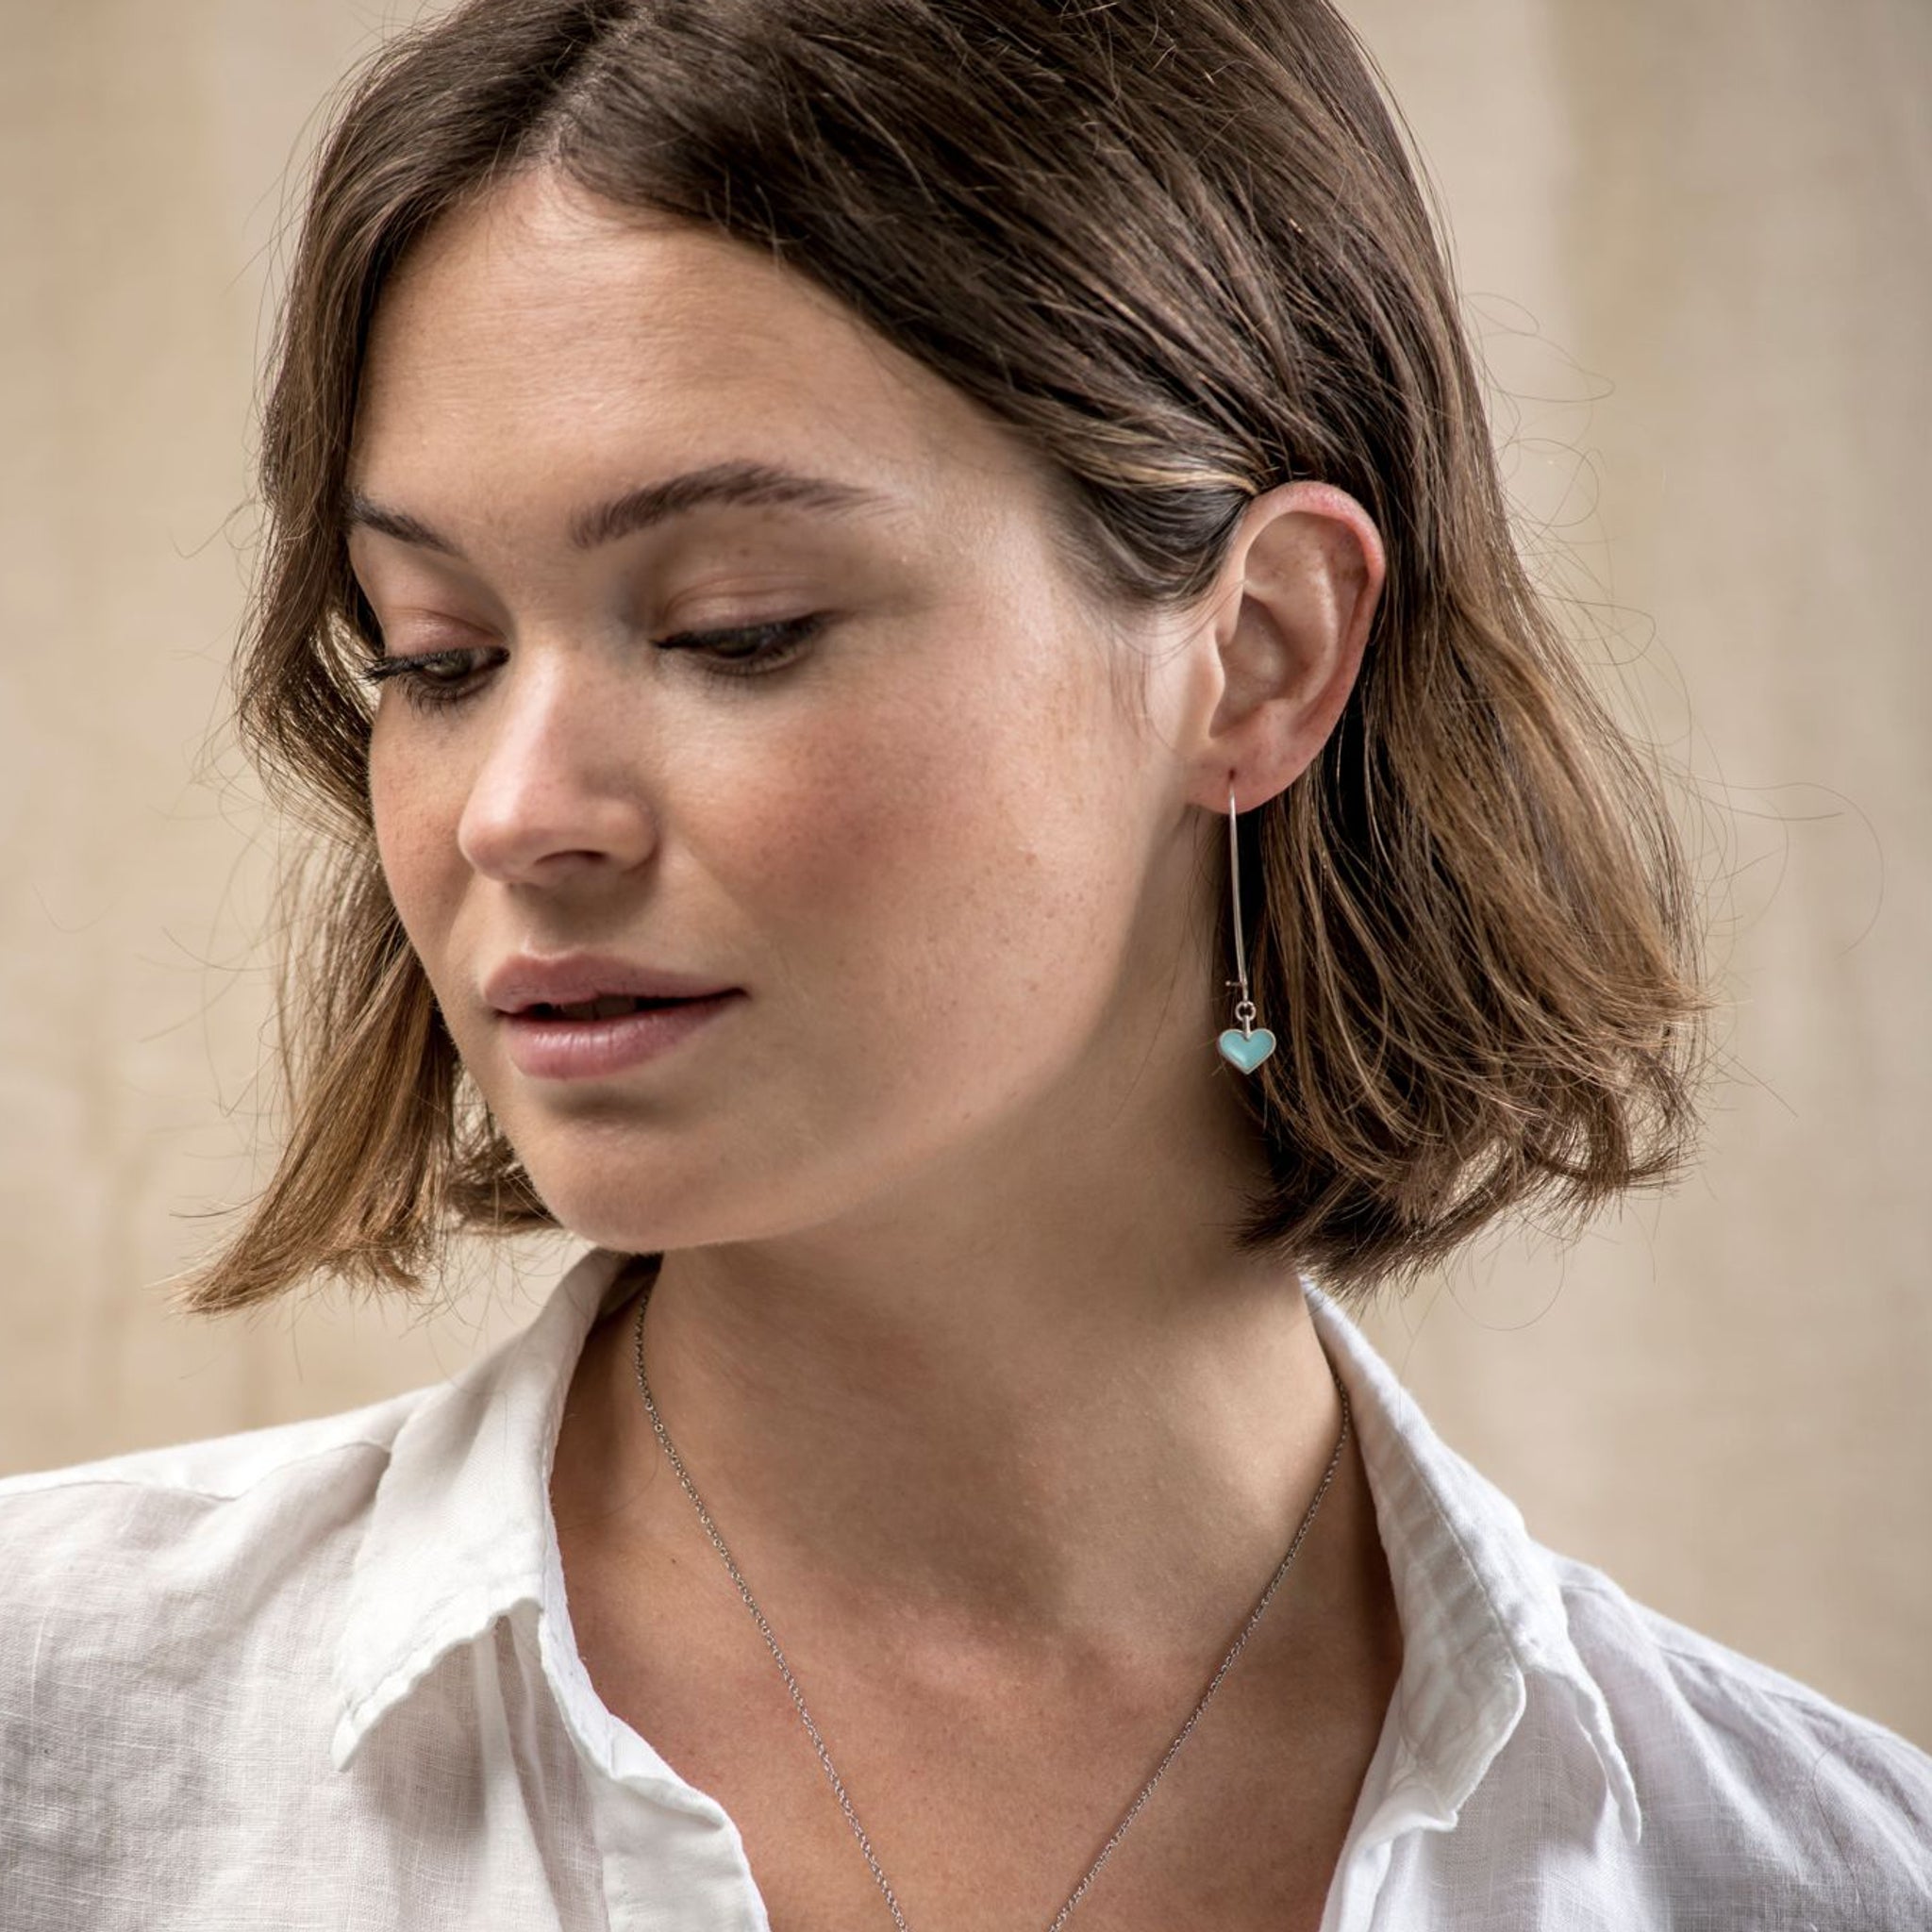 Fashion model wearing a simple, turquoise, heart shaped drop earrings.